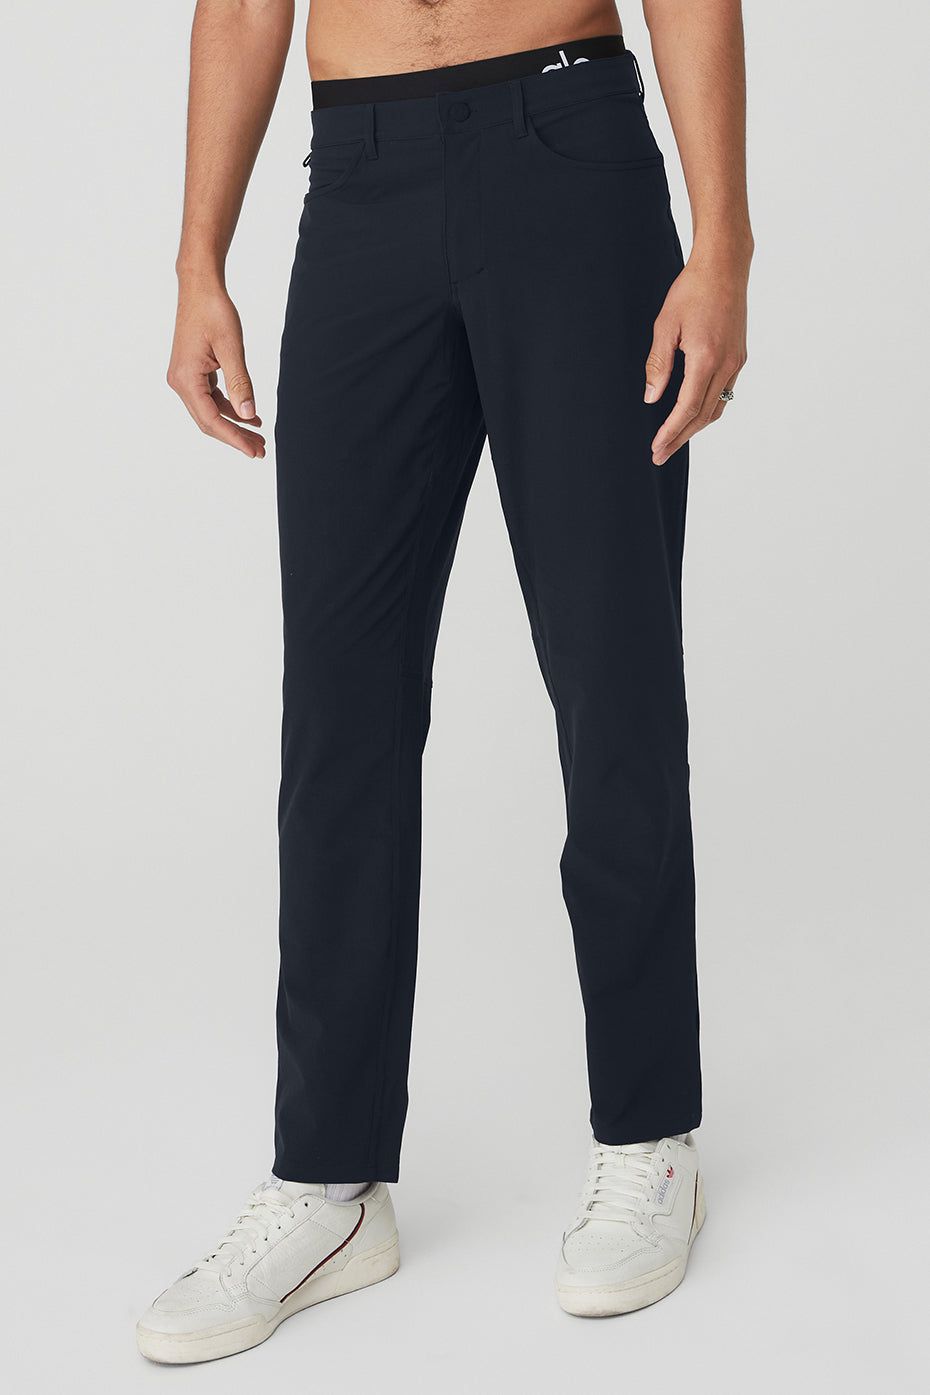 Mens Night Running Reflective Trousers Joggers Sport Sweatpants Hip Hop  Pants | eBay